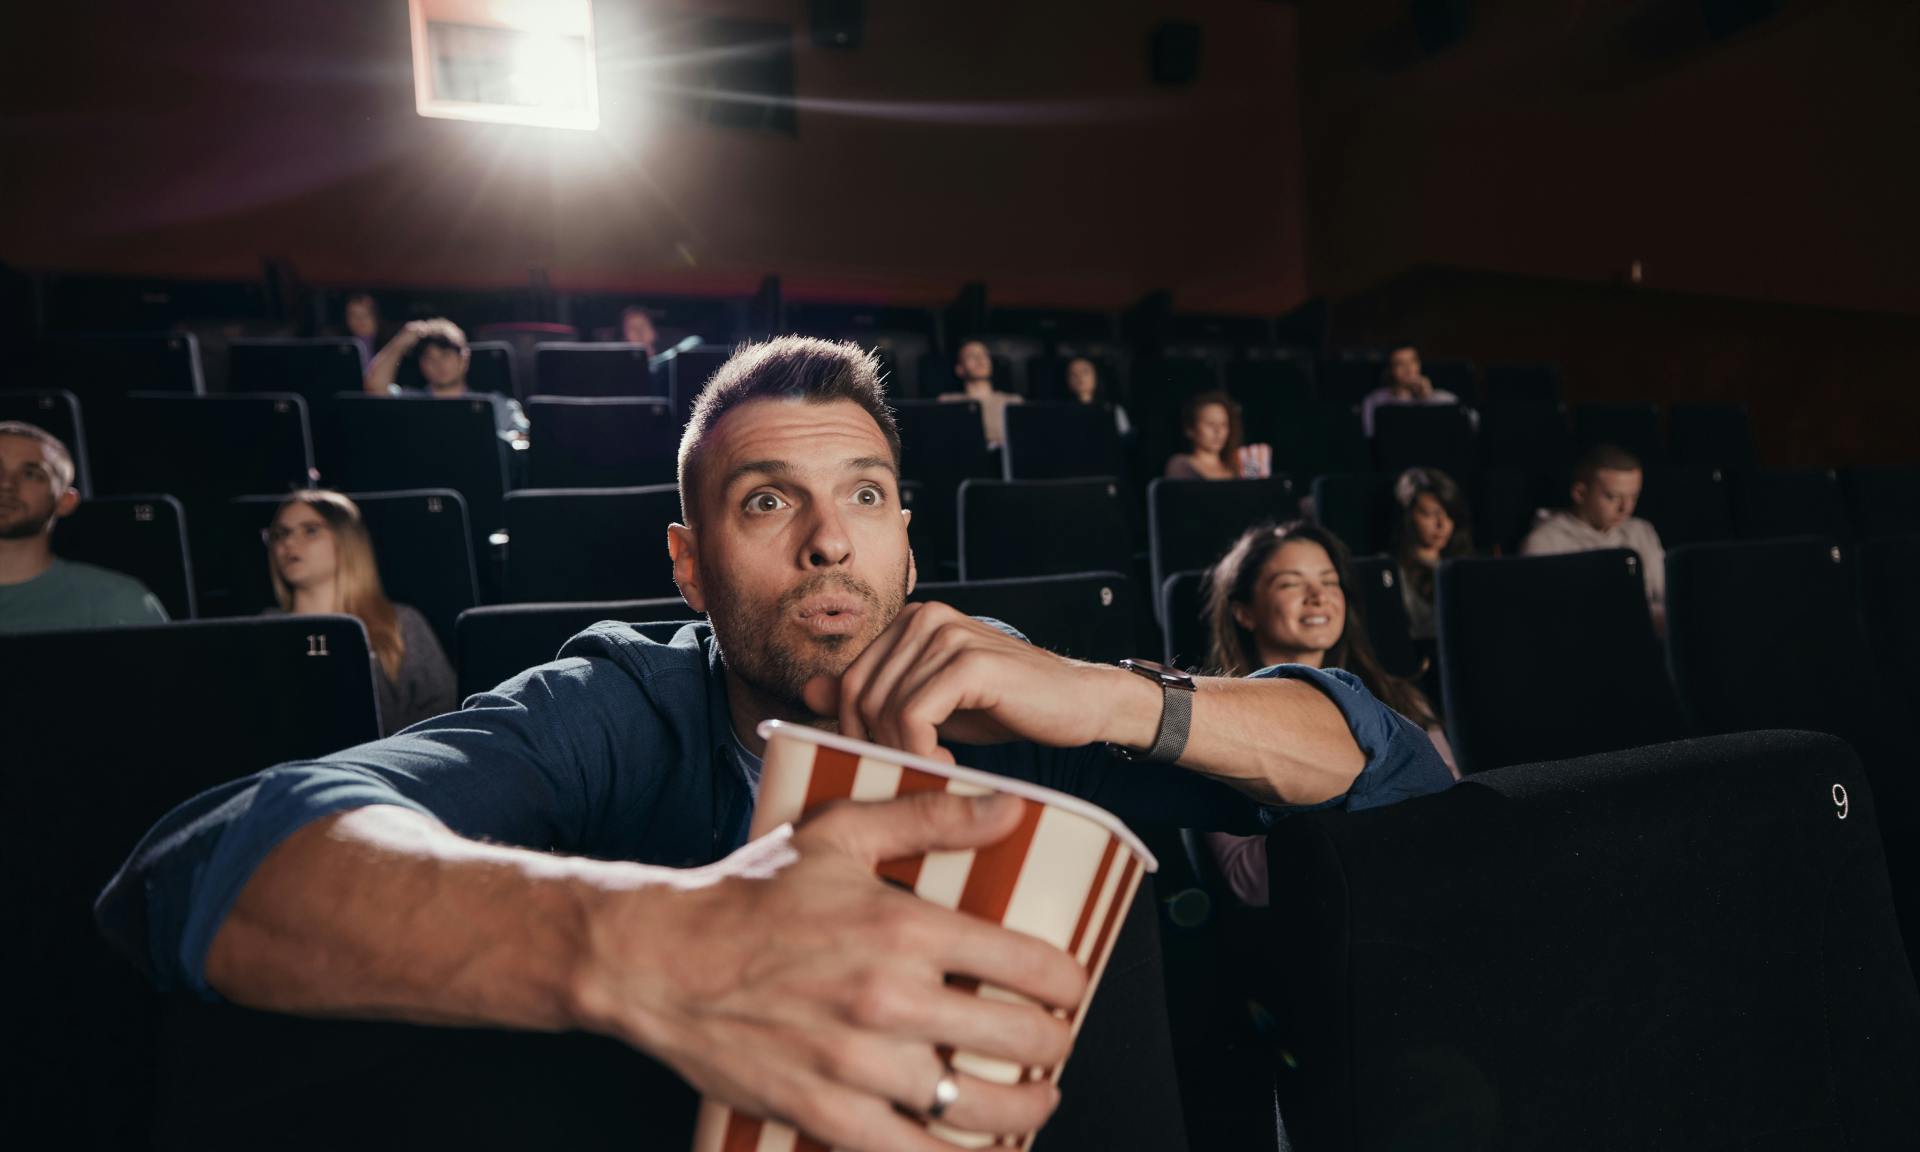 A man watching a movie